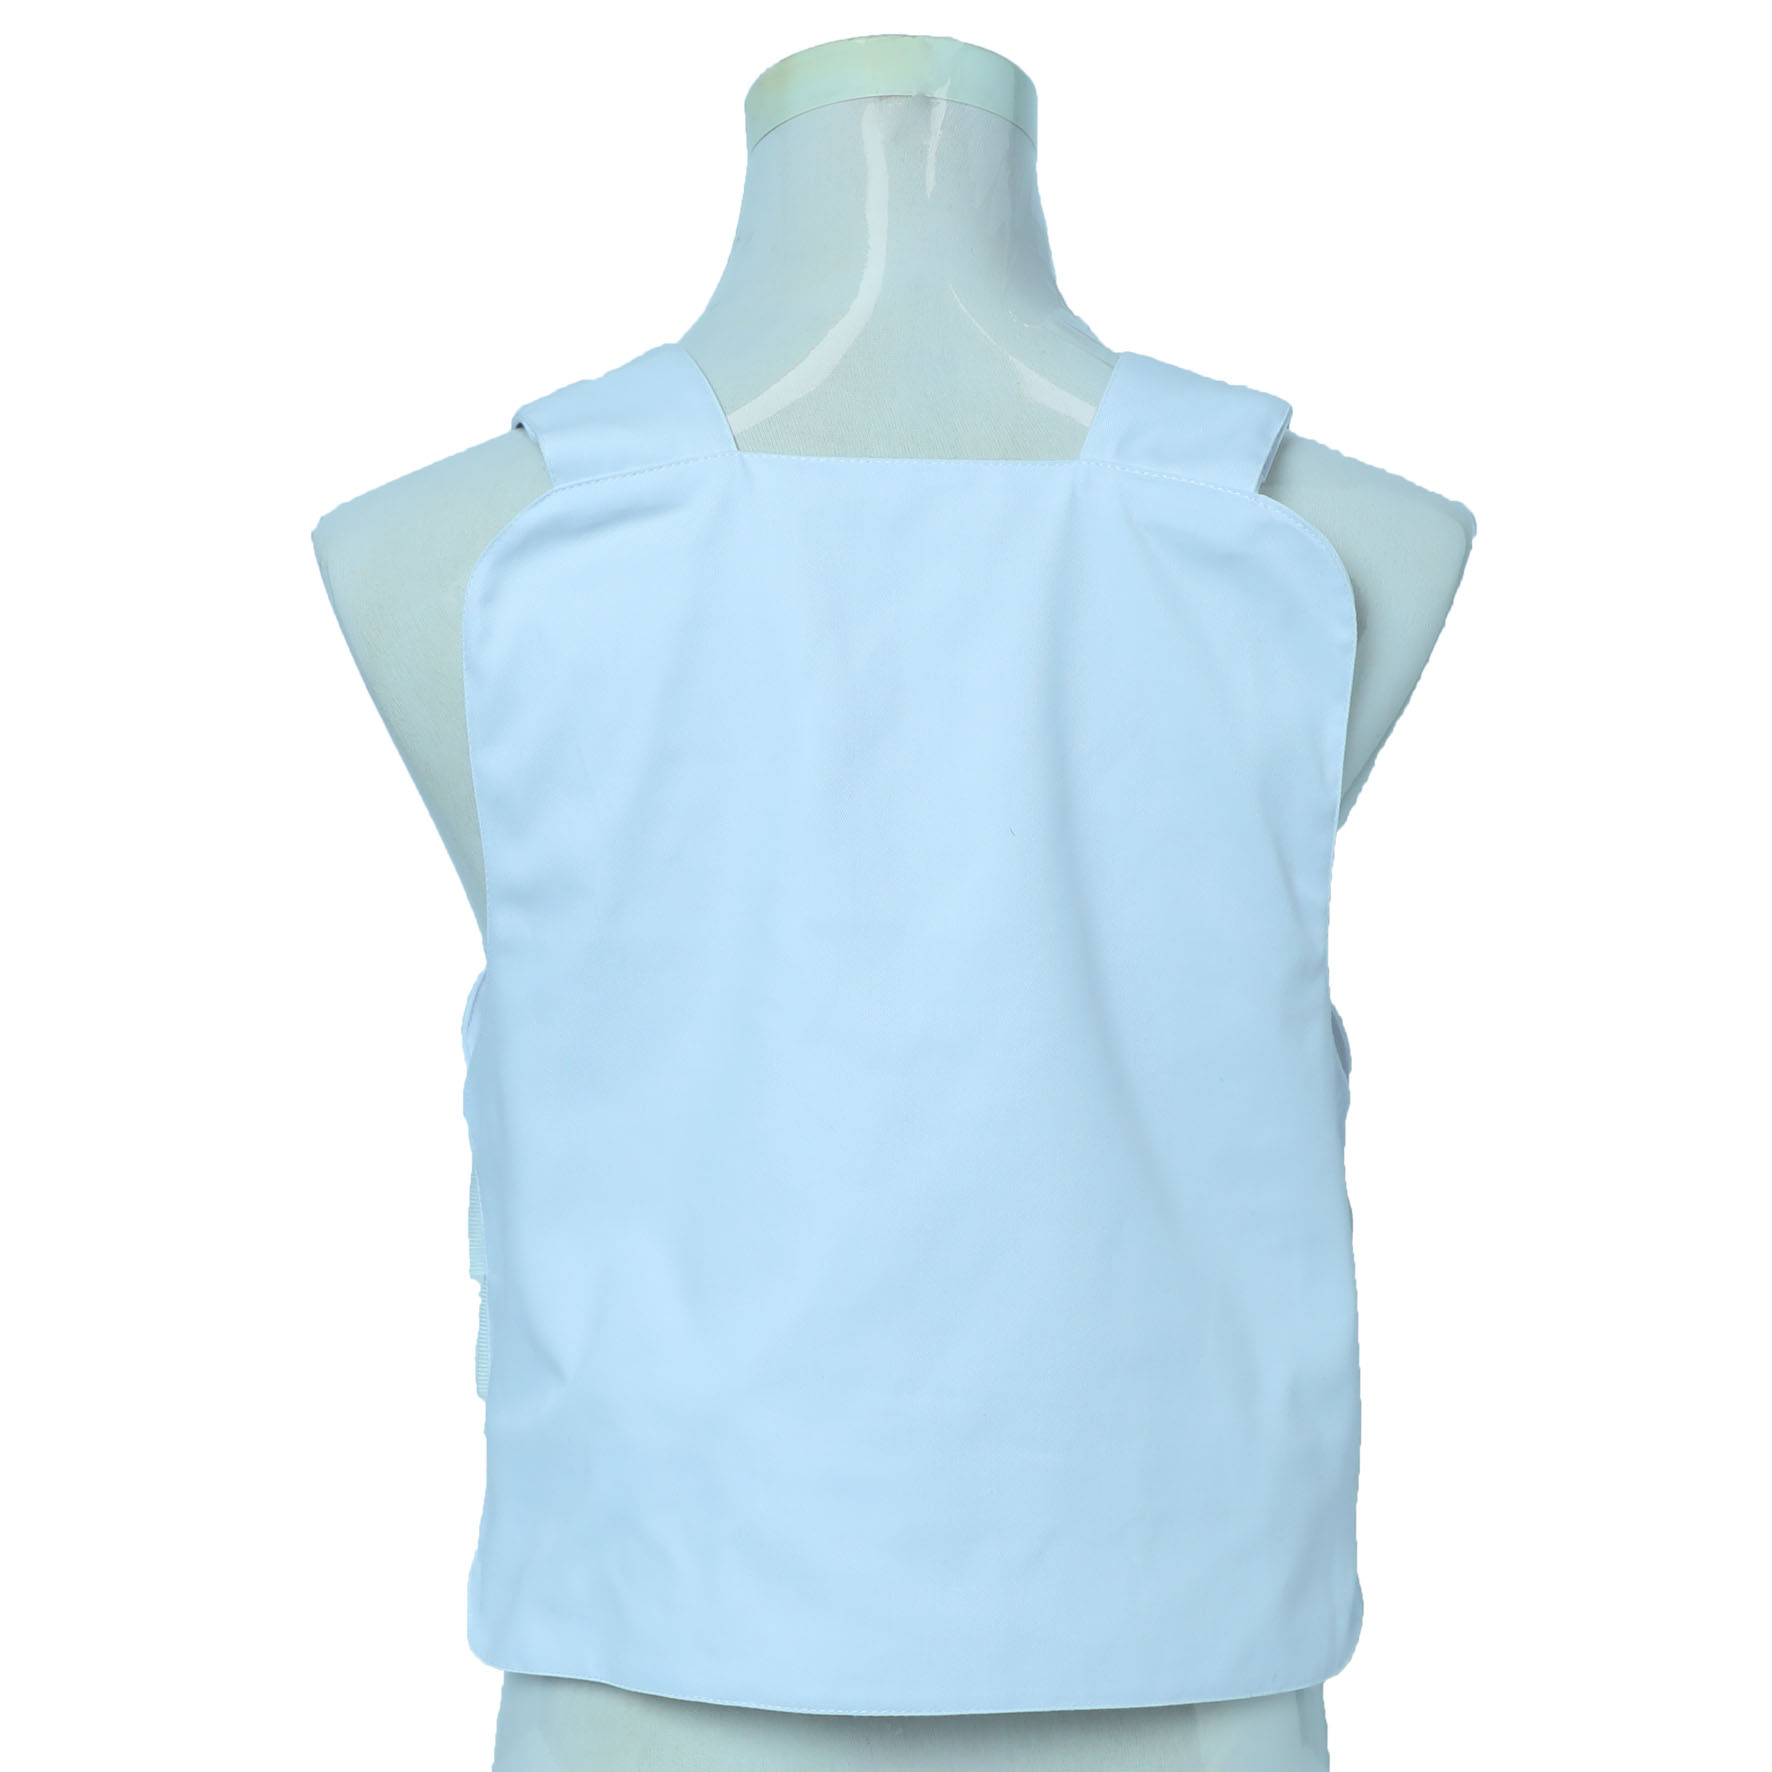 Lightweight Soft Body Armor Vest White Bulletproof Vest